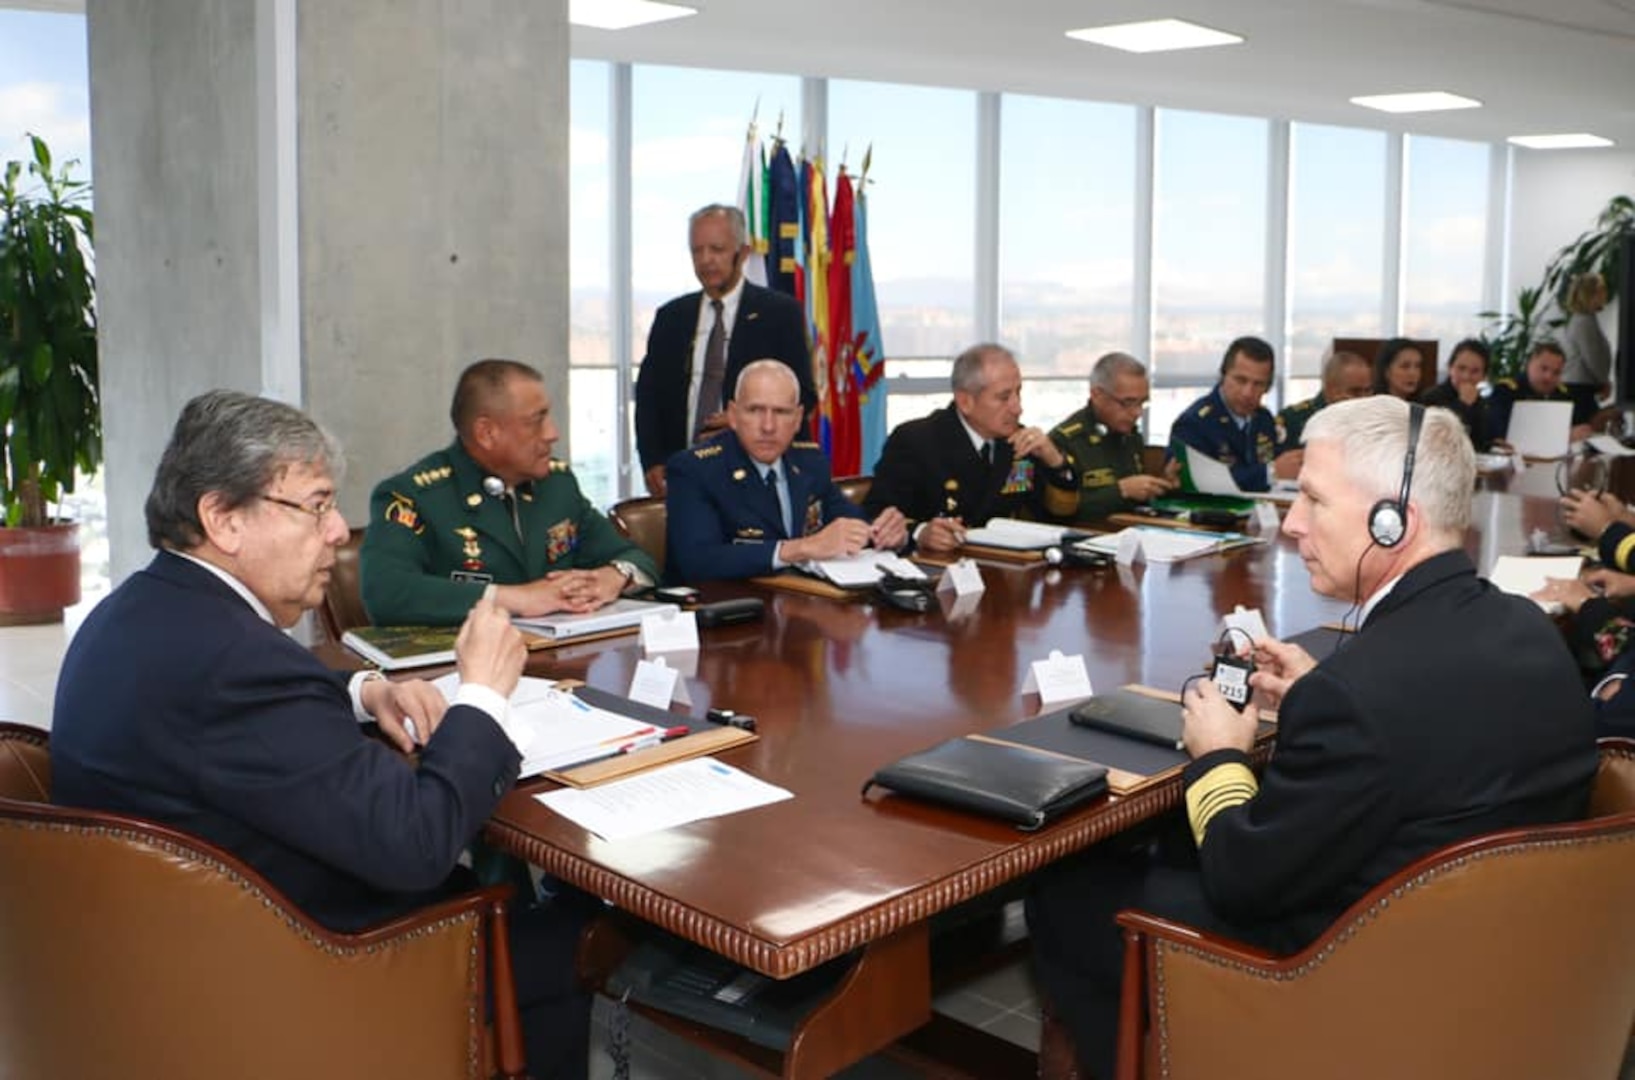 Colombian Minister of Defense Carlos Holmes Trujillo and U.S. Navy Adm. Craig S. Faller meet at a table.